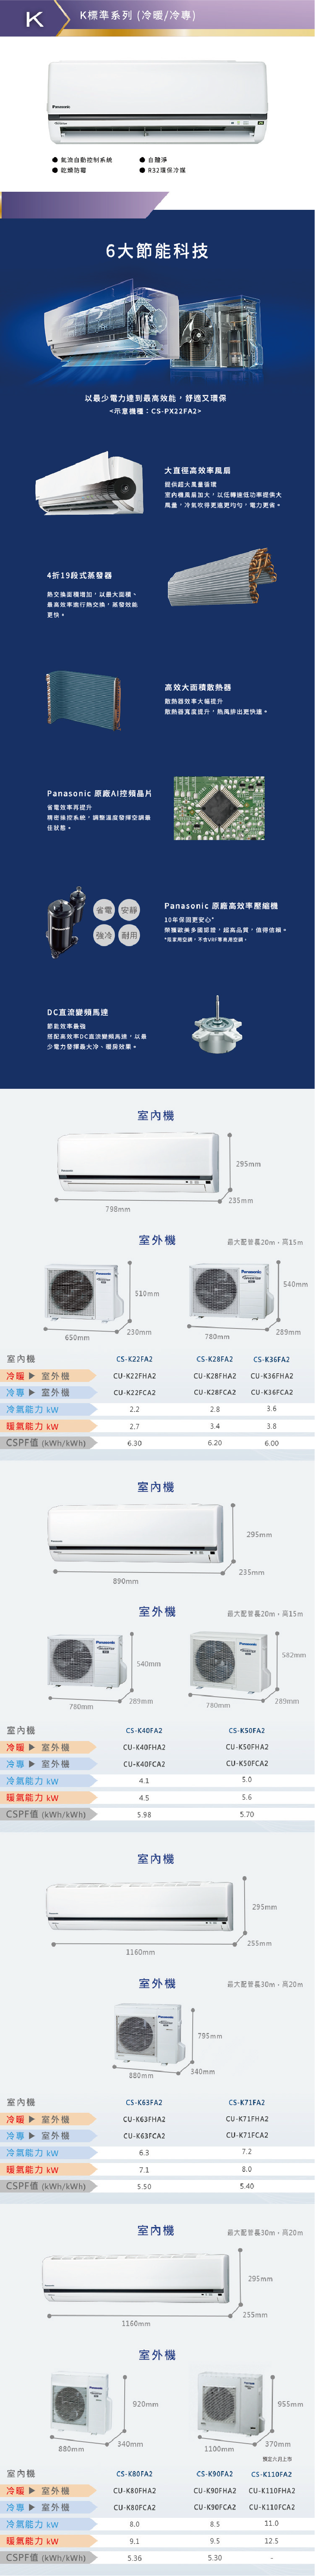 CU-K63FCA2 10坪適用 K系列 一對一 分離式 變頻 冷專 冷氣 CS-K63FA2